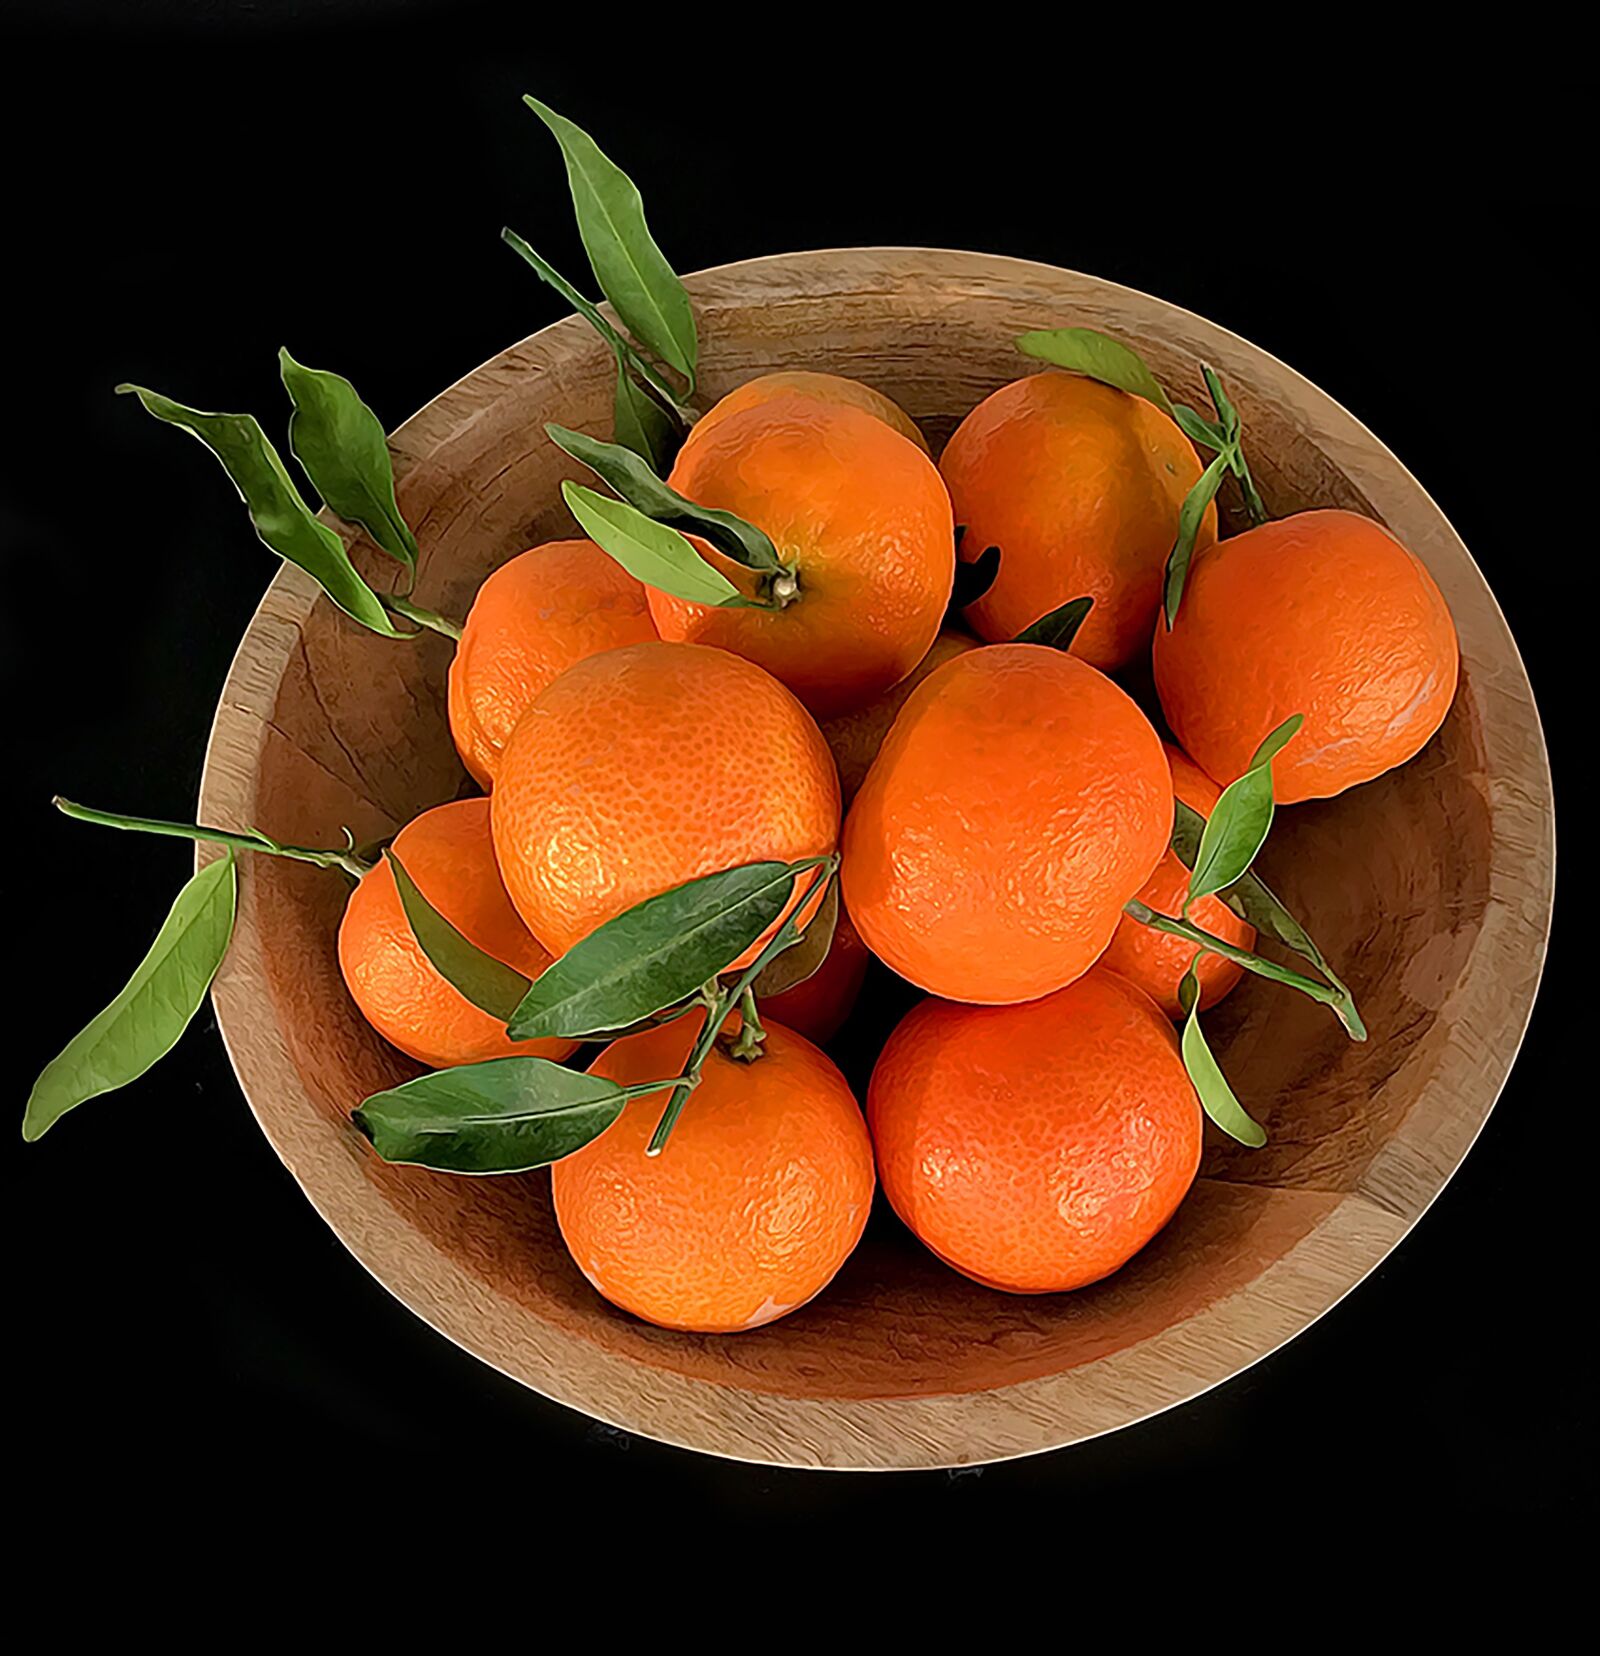 Apple iPhone 7 Plus sample photo. Oranges, citrus fruits, fruit photography